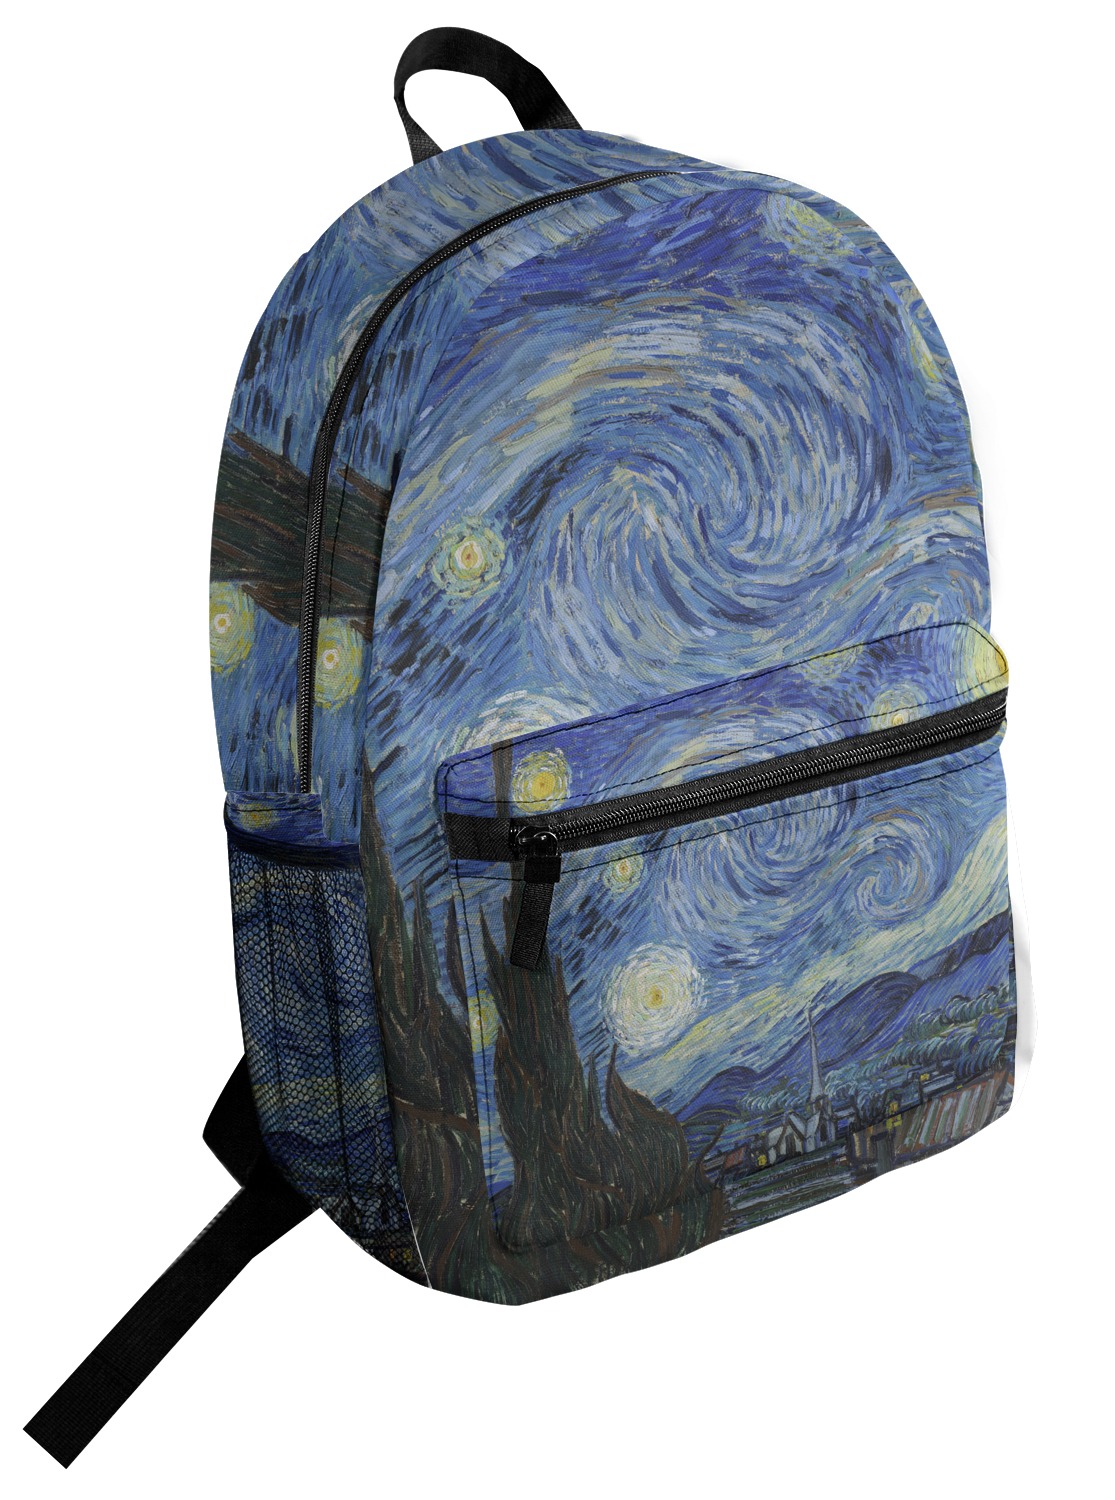 ALAZA Van Gogh's Starry Night Backpack Daypack College School Travel  Shoulder Bag